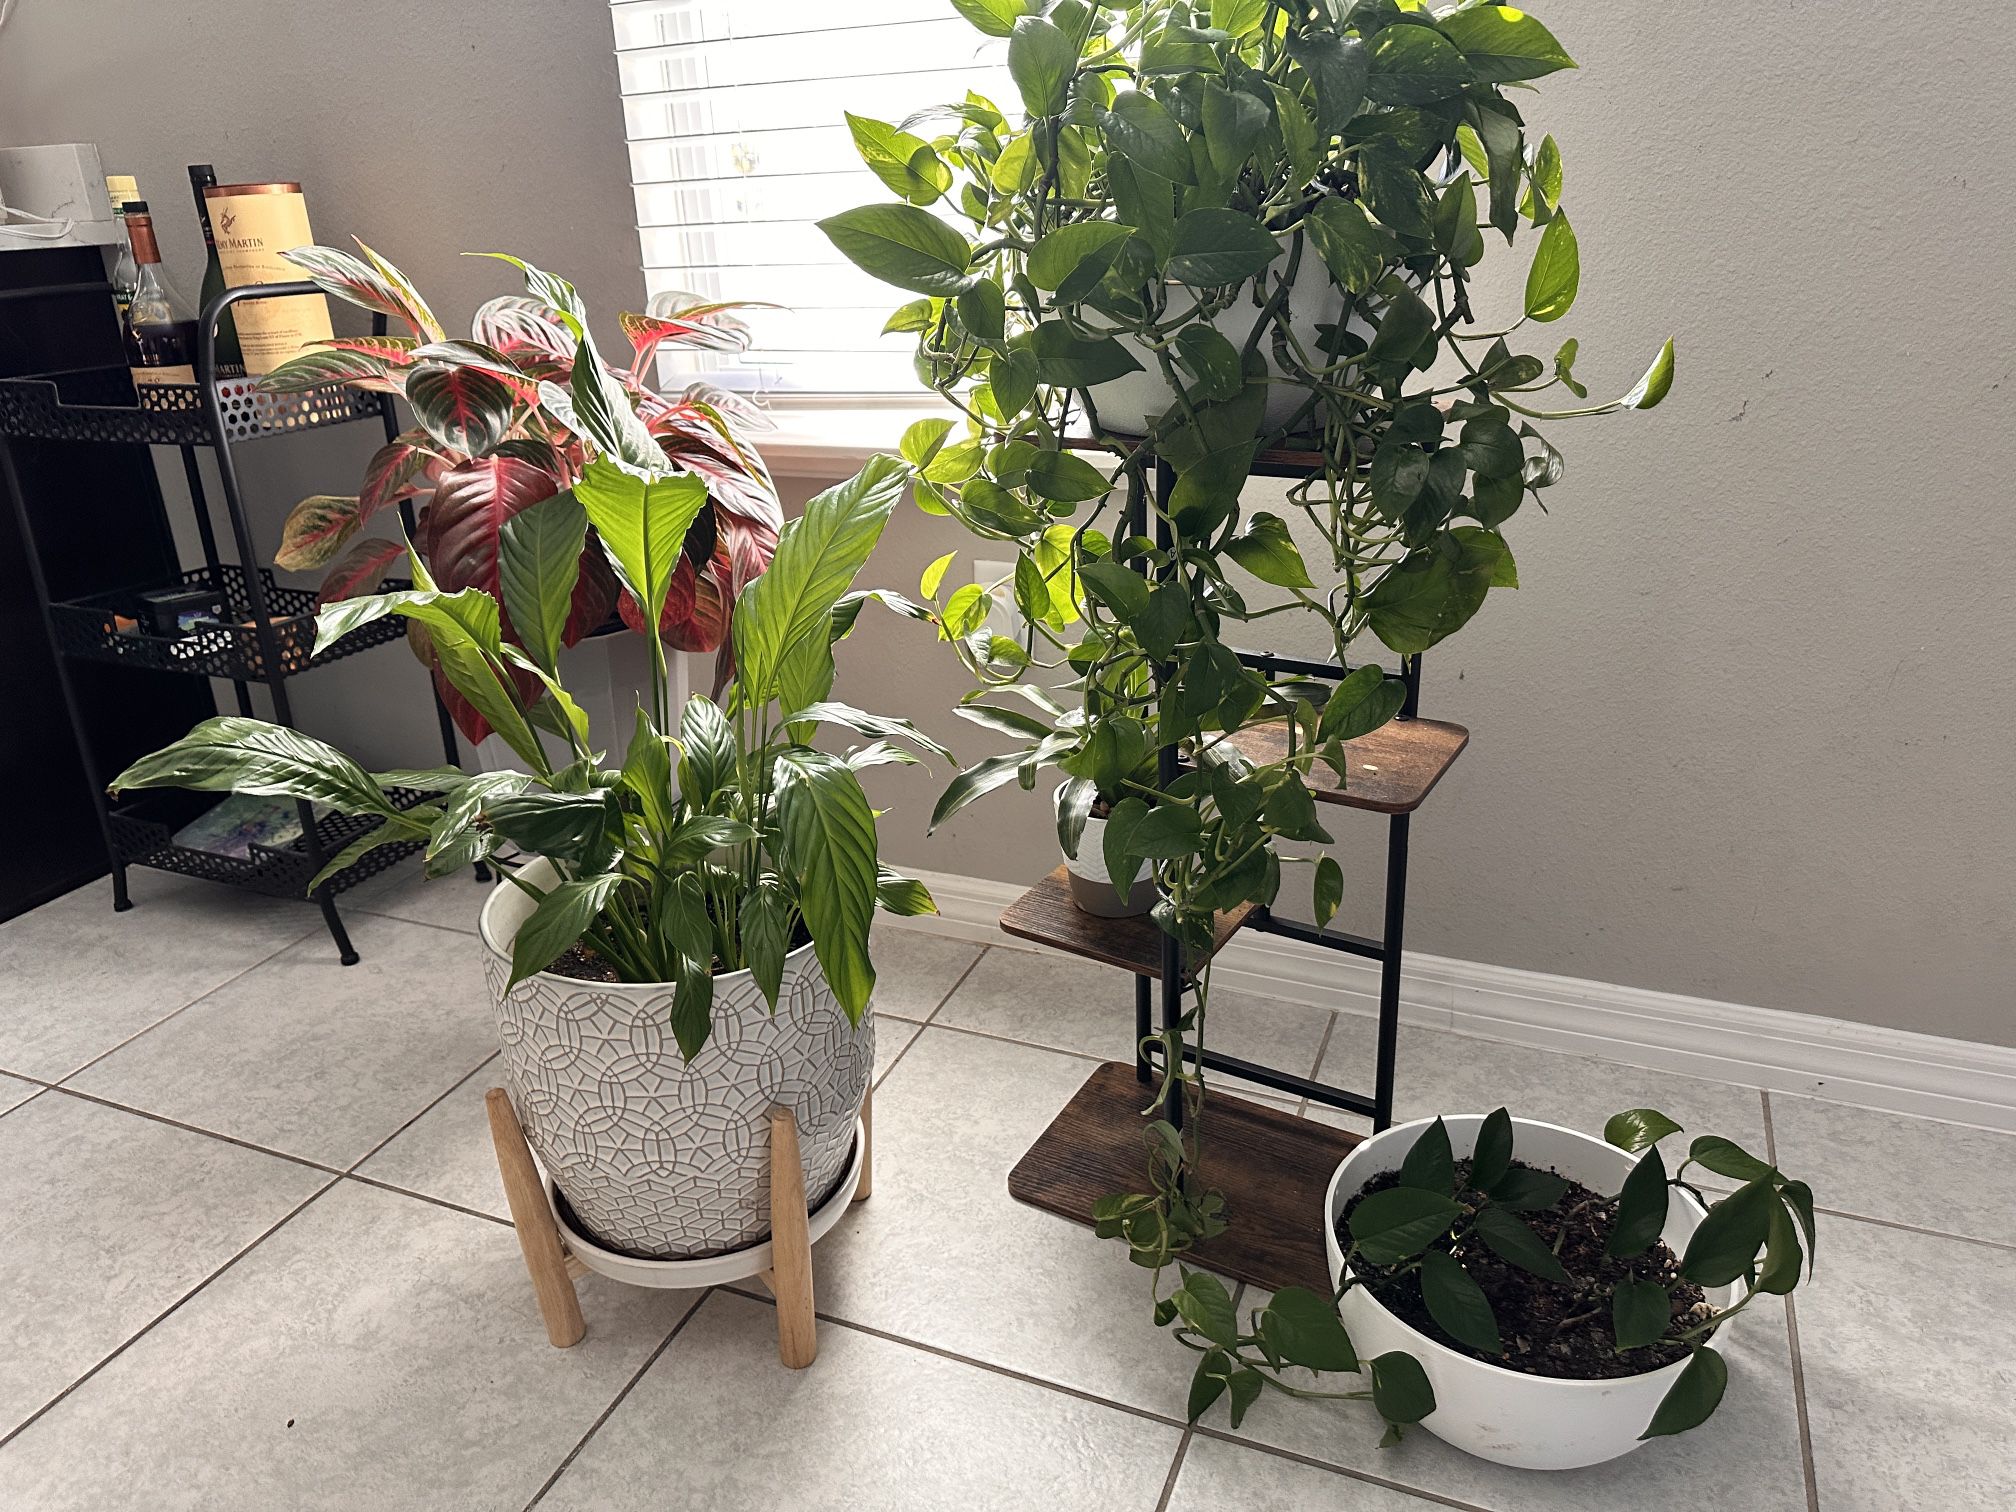 Plants And pots